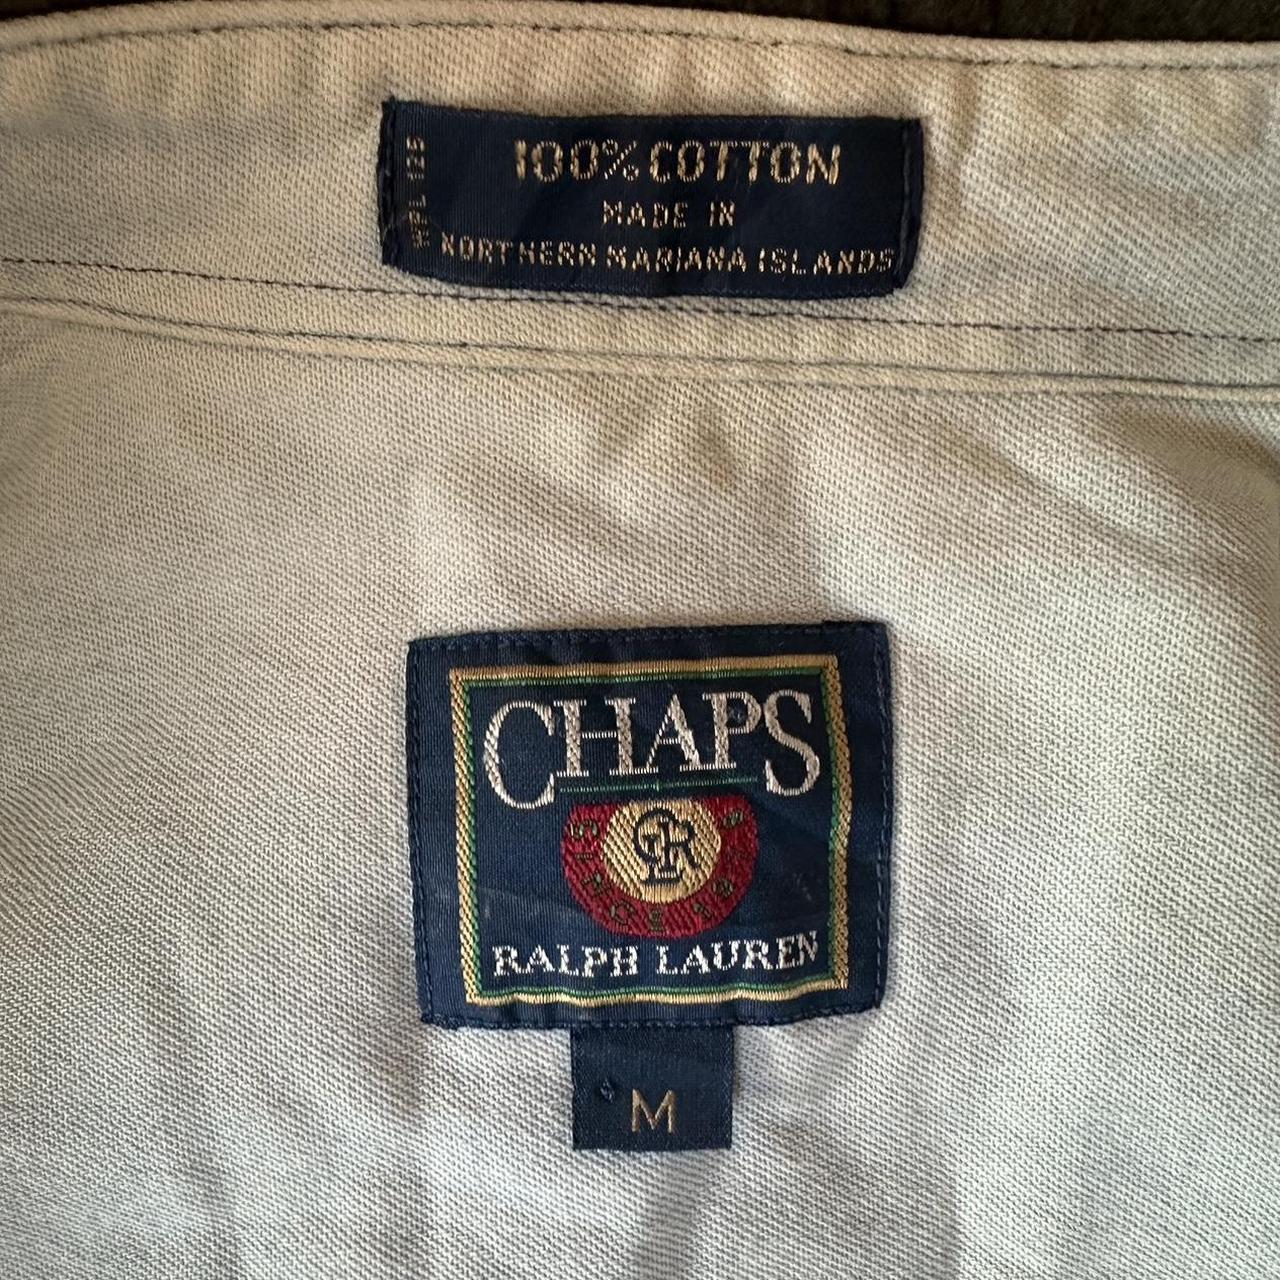 Vintage Ralph Lauren patterned party shirt - Men’s... - Depop